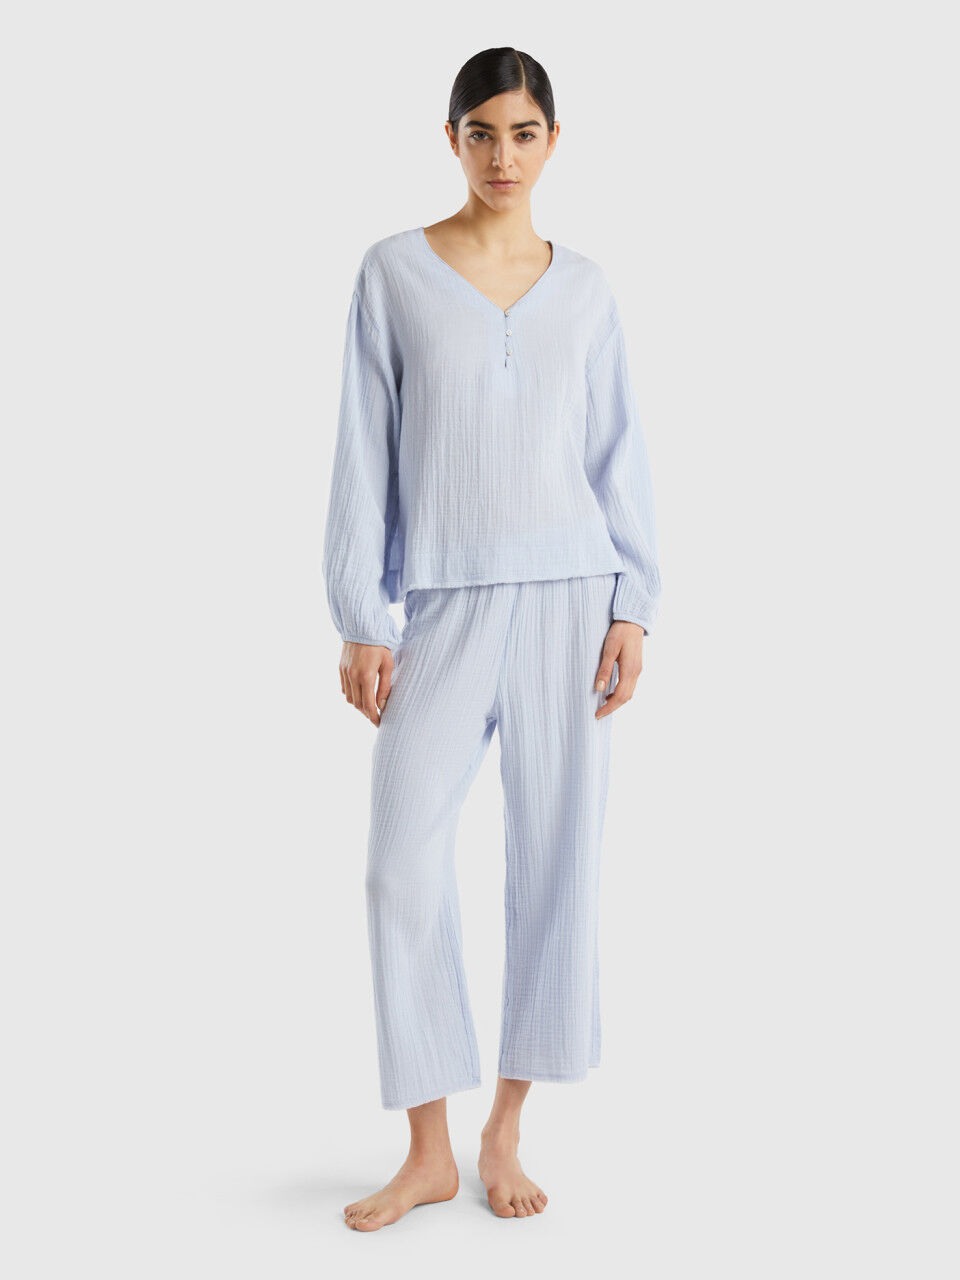 Pyjamas in warm cotton